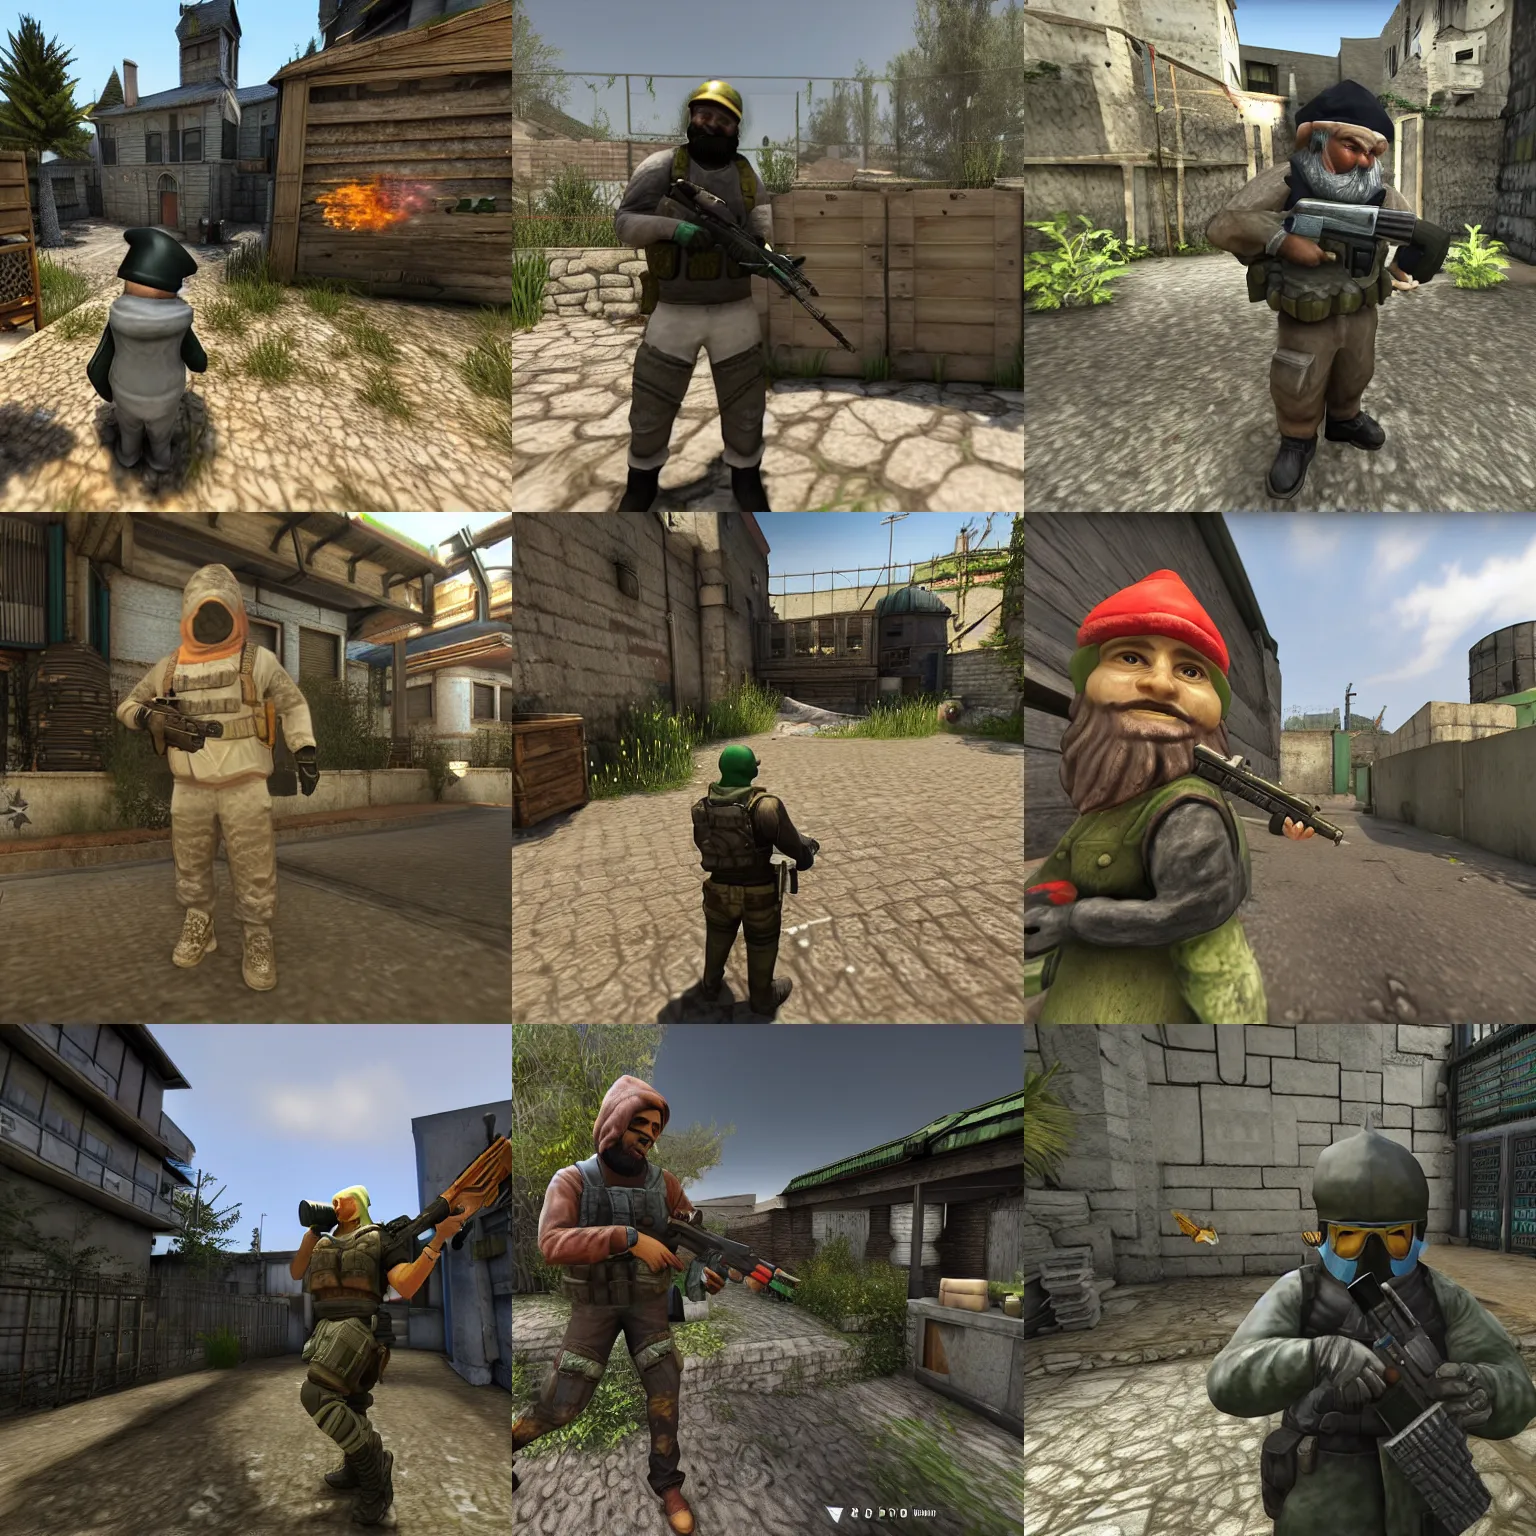 Prompt: garden gnome hidden behind terrorist in Counter-Strike Global Offensive, CSGO, video game render